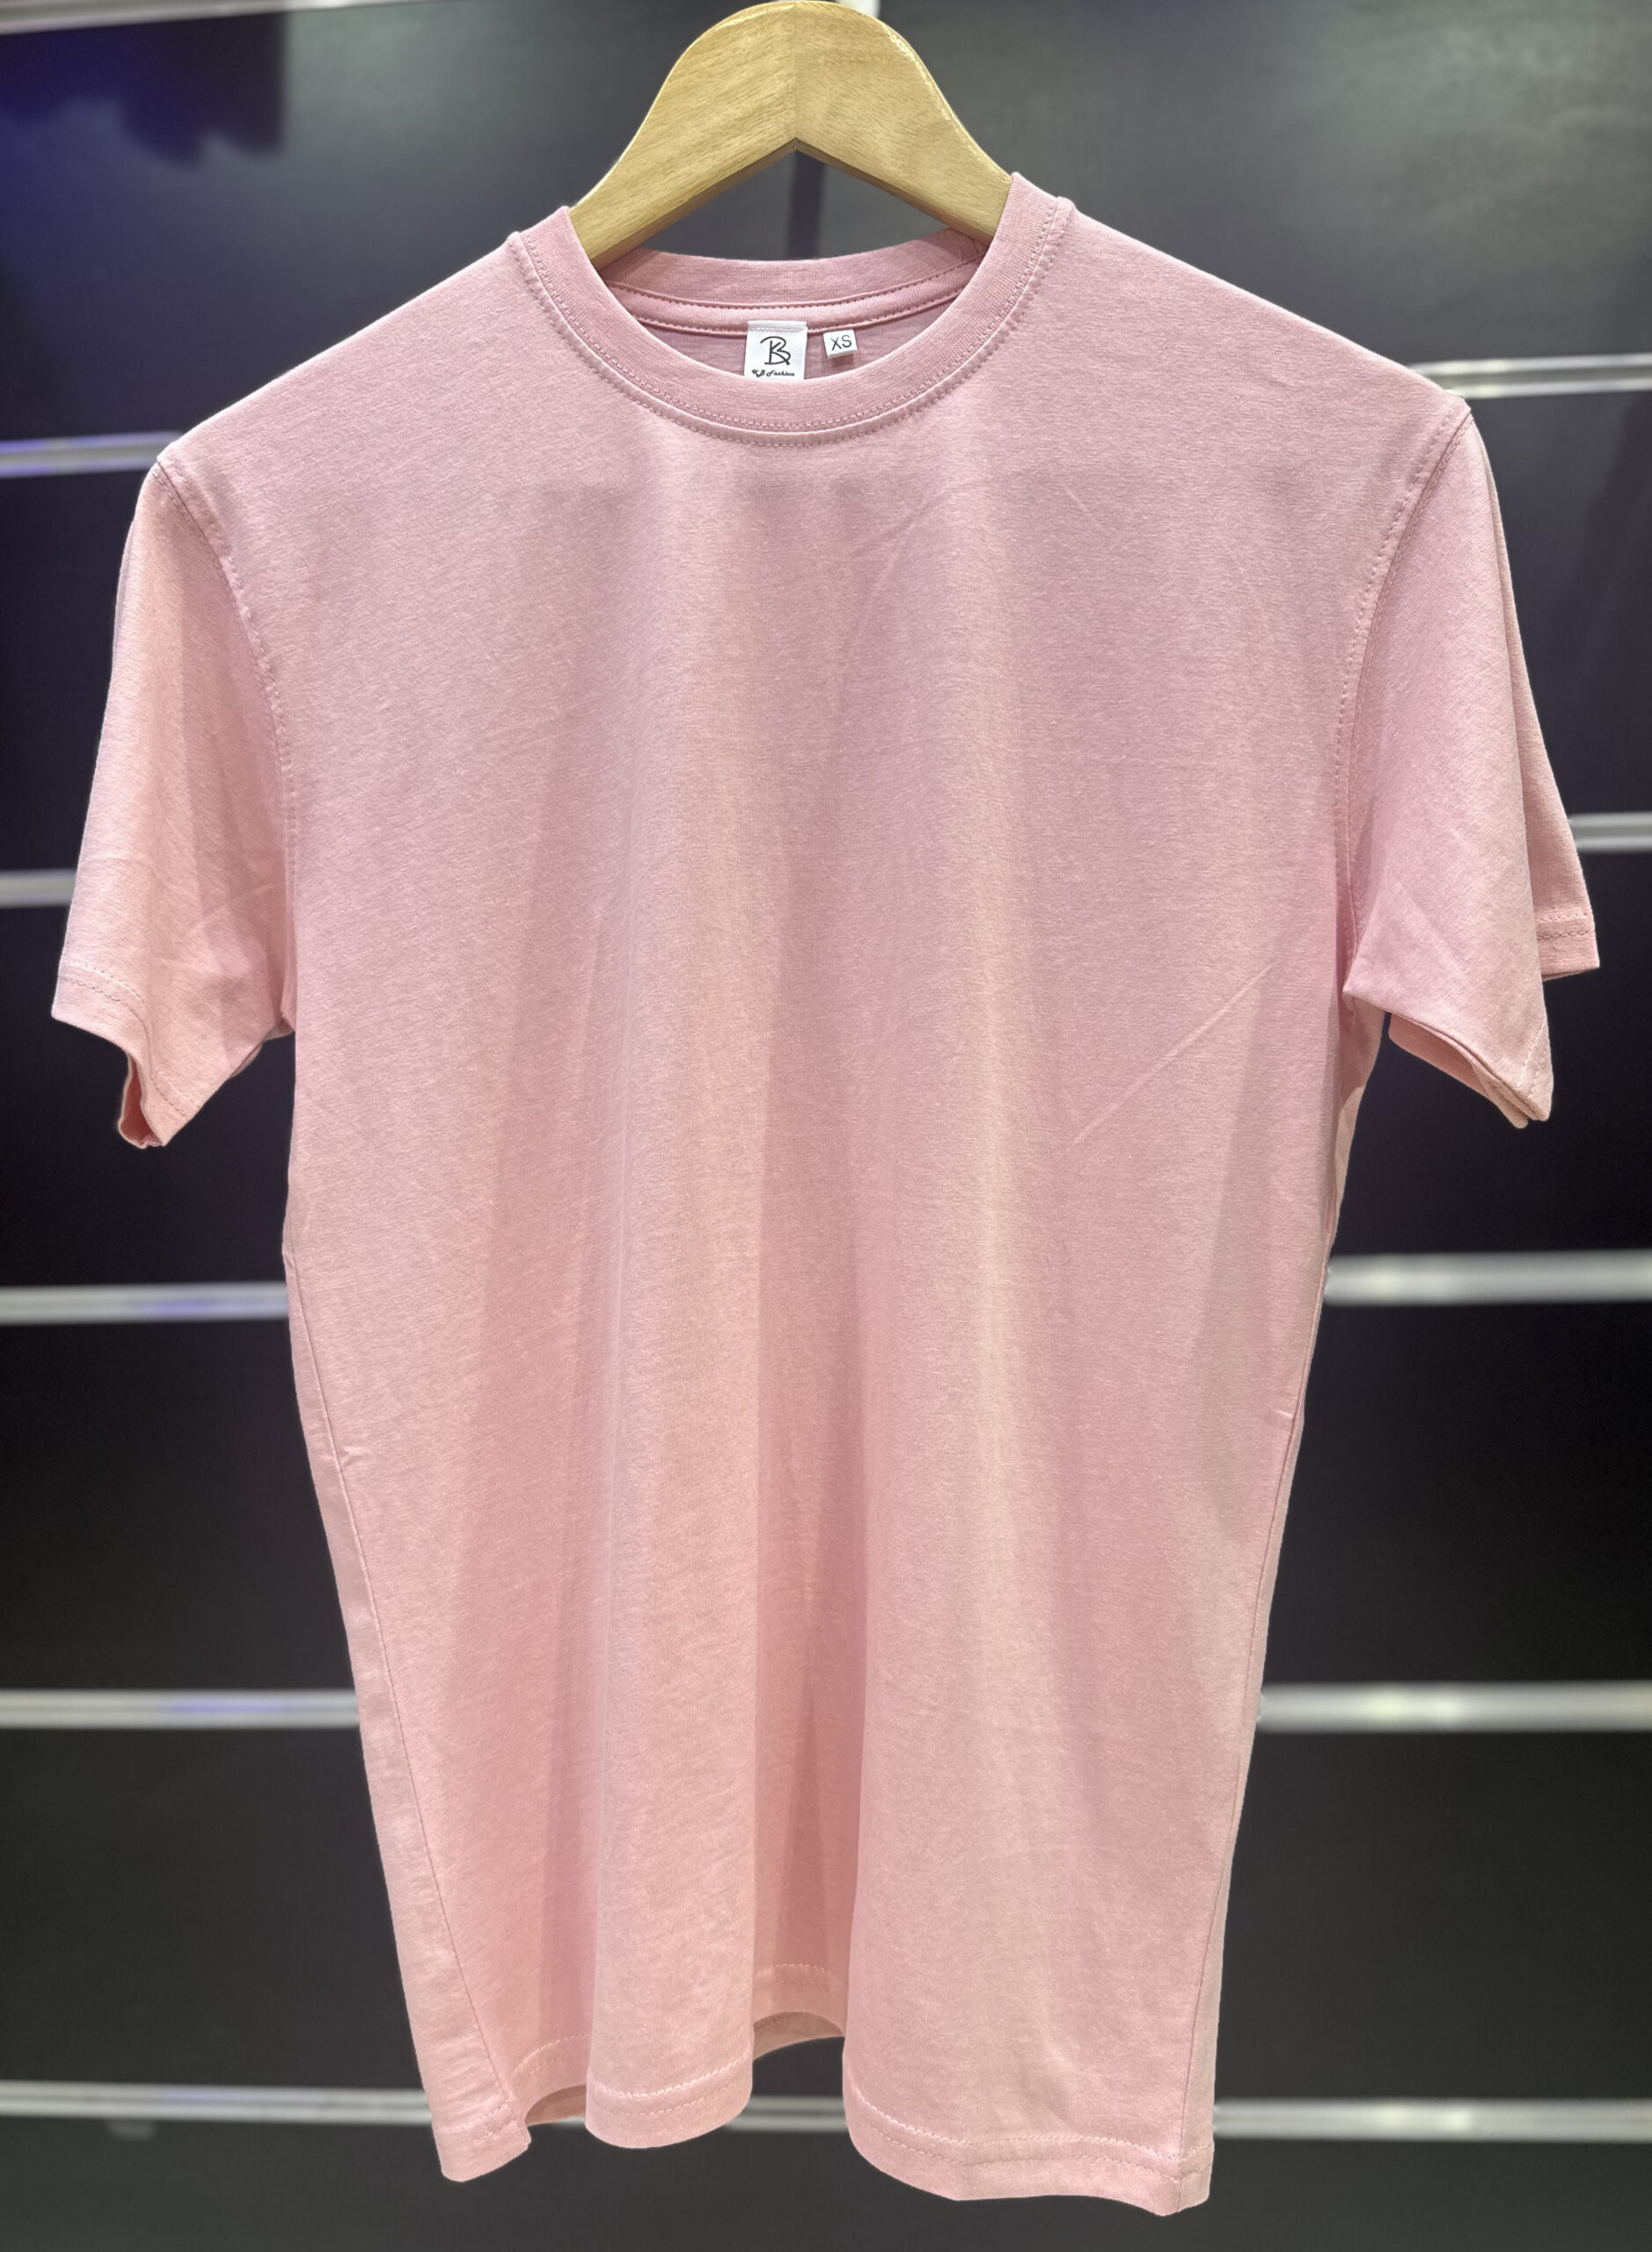 plain Pink T Shirts - soft cotton t shirts wholesale